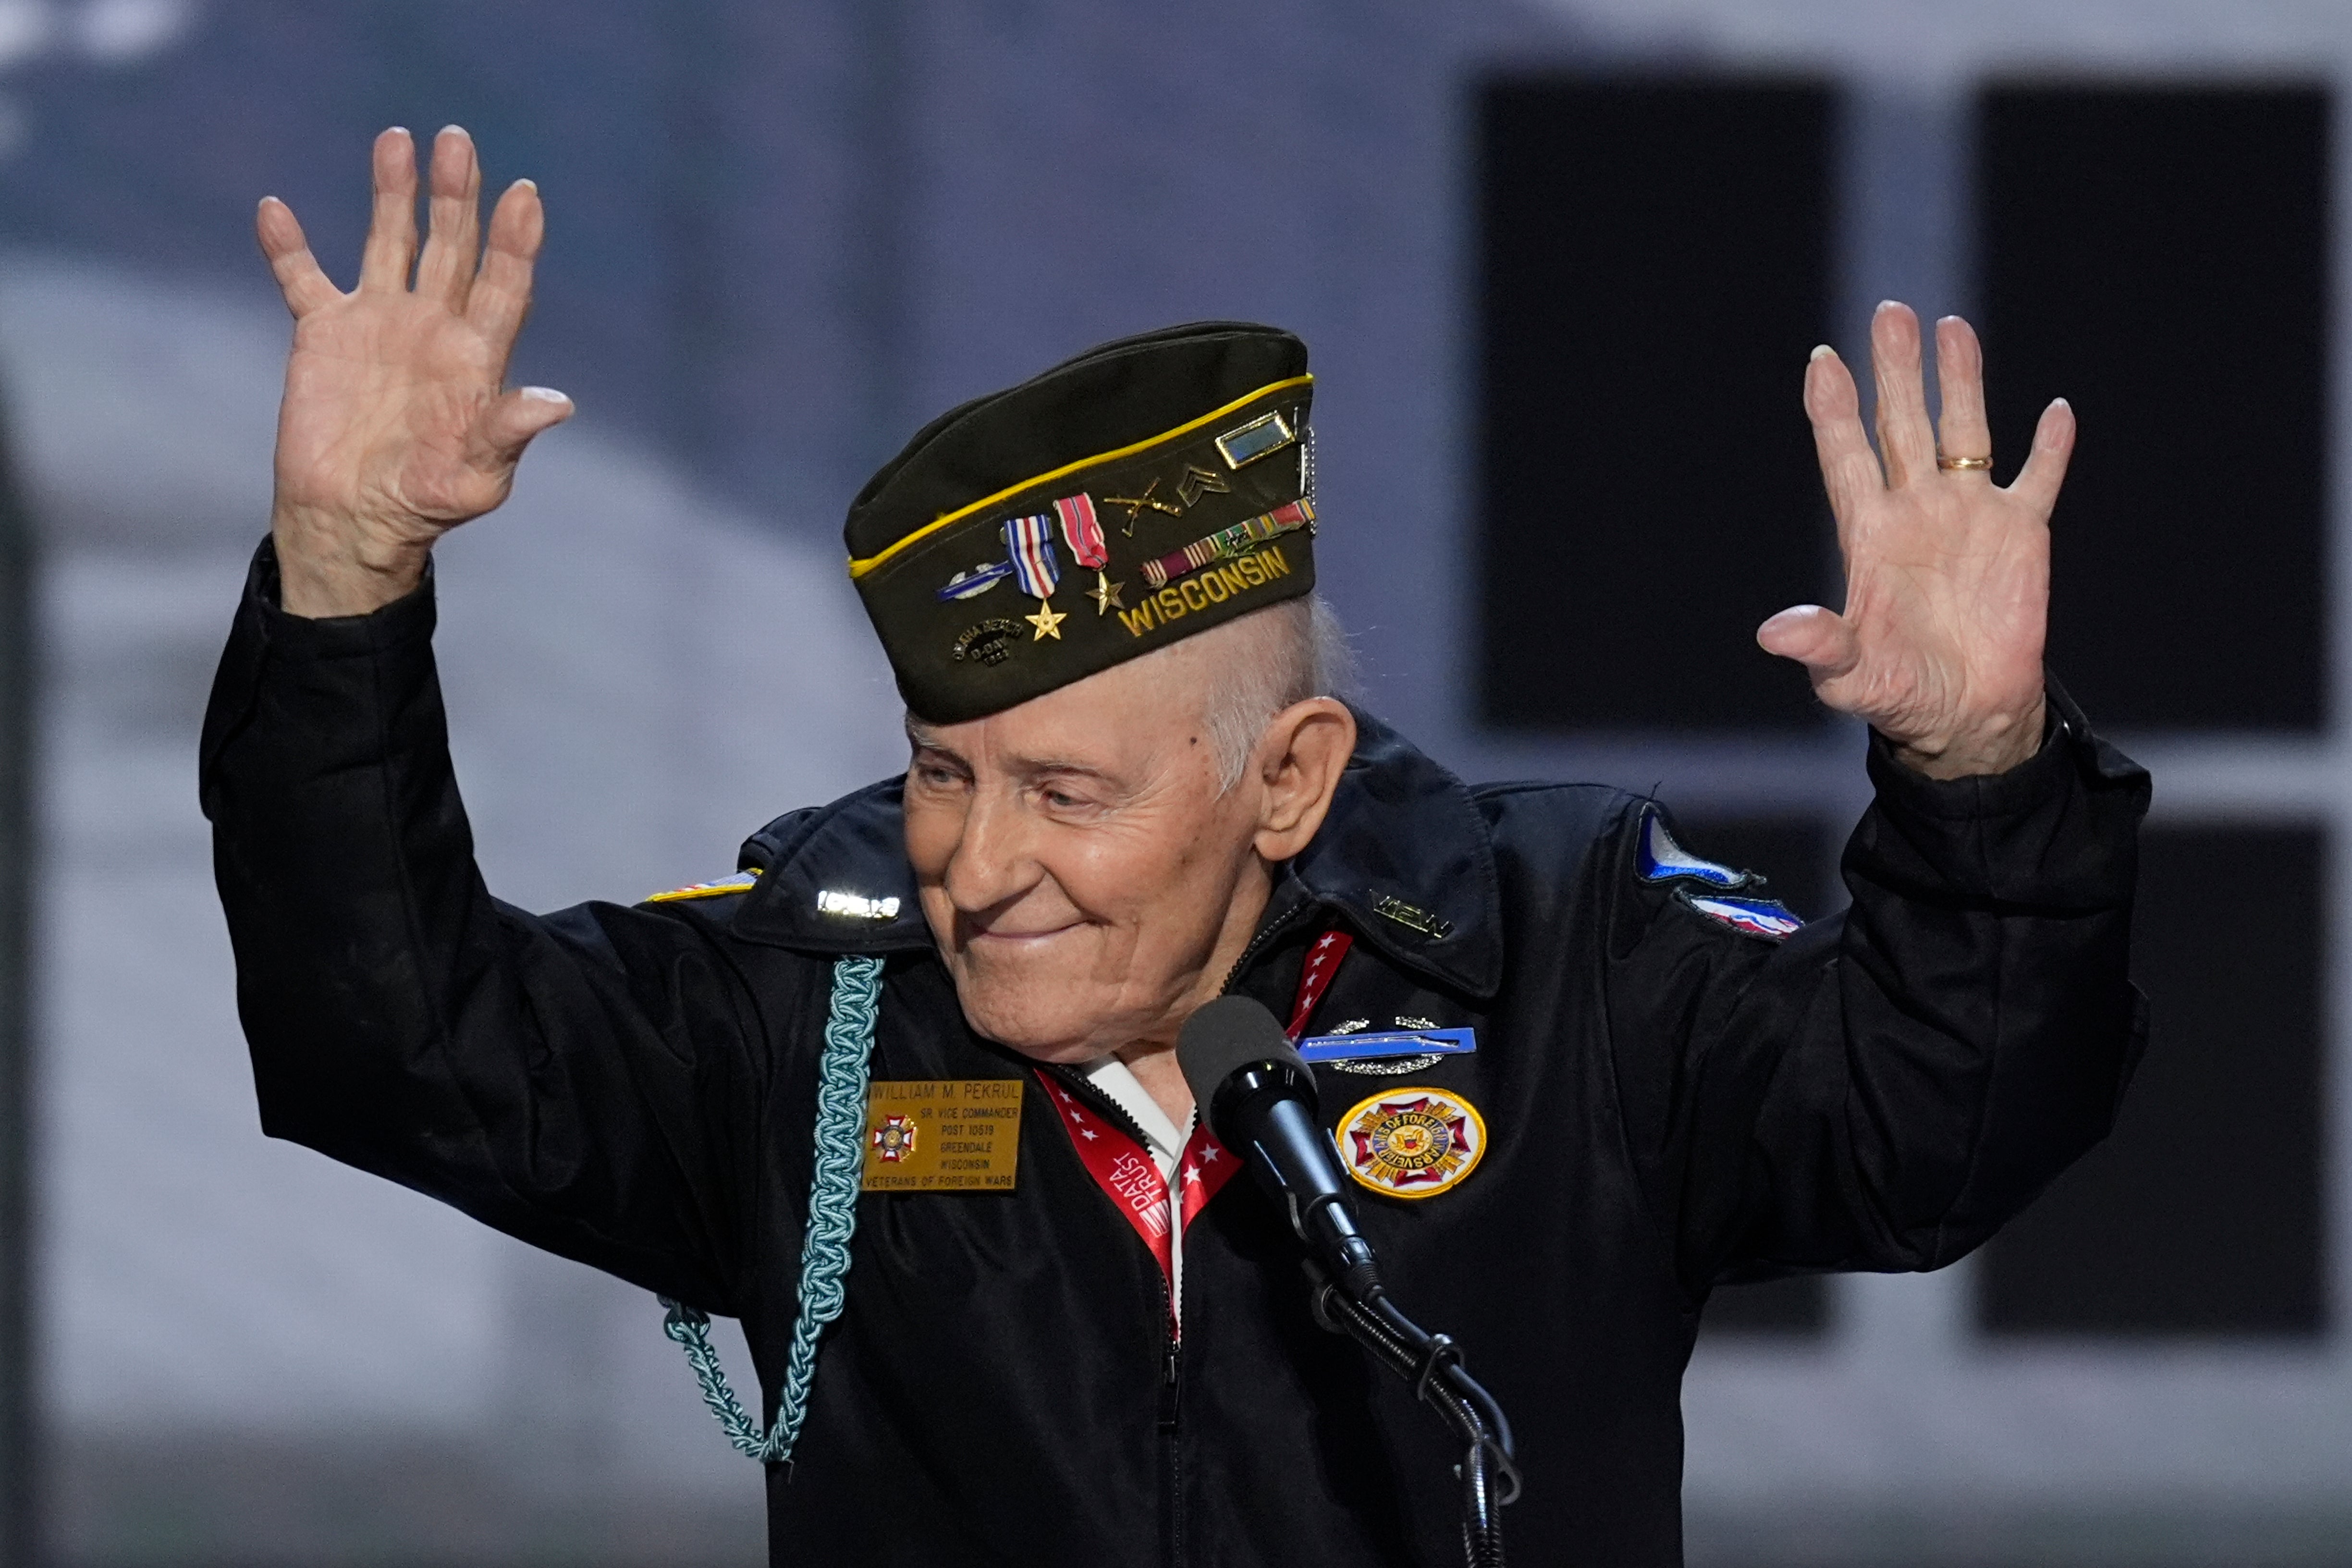 William Pekrel, 98, fought in the Battle of the Bulge in World War II